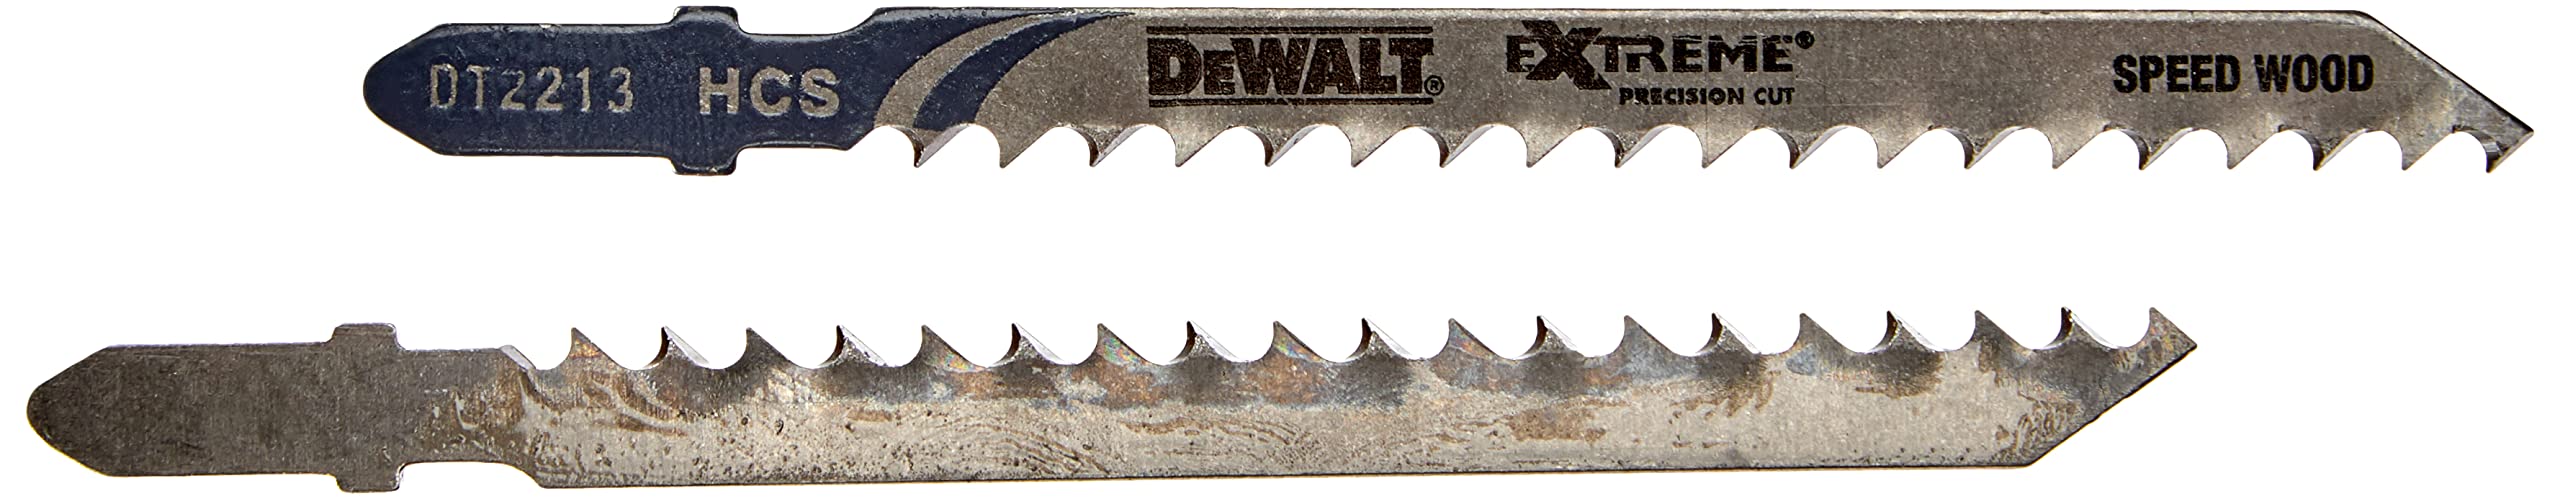 Dewalt DT2214-QZ Jigsaw Blade HCS wood, up to 2.36" (20 piece)